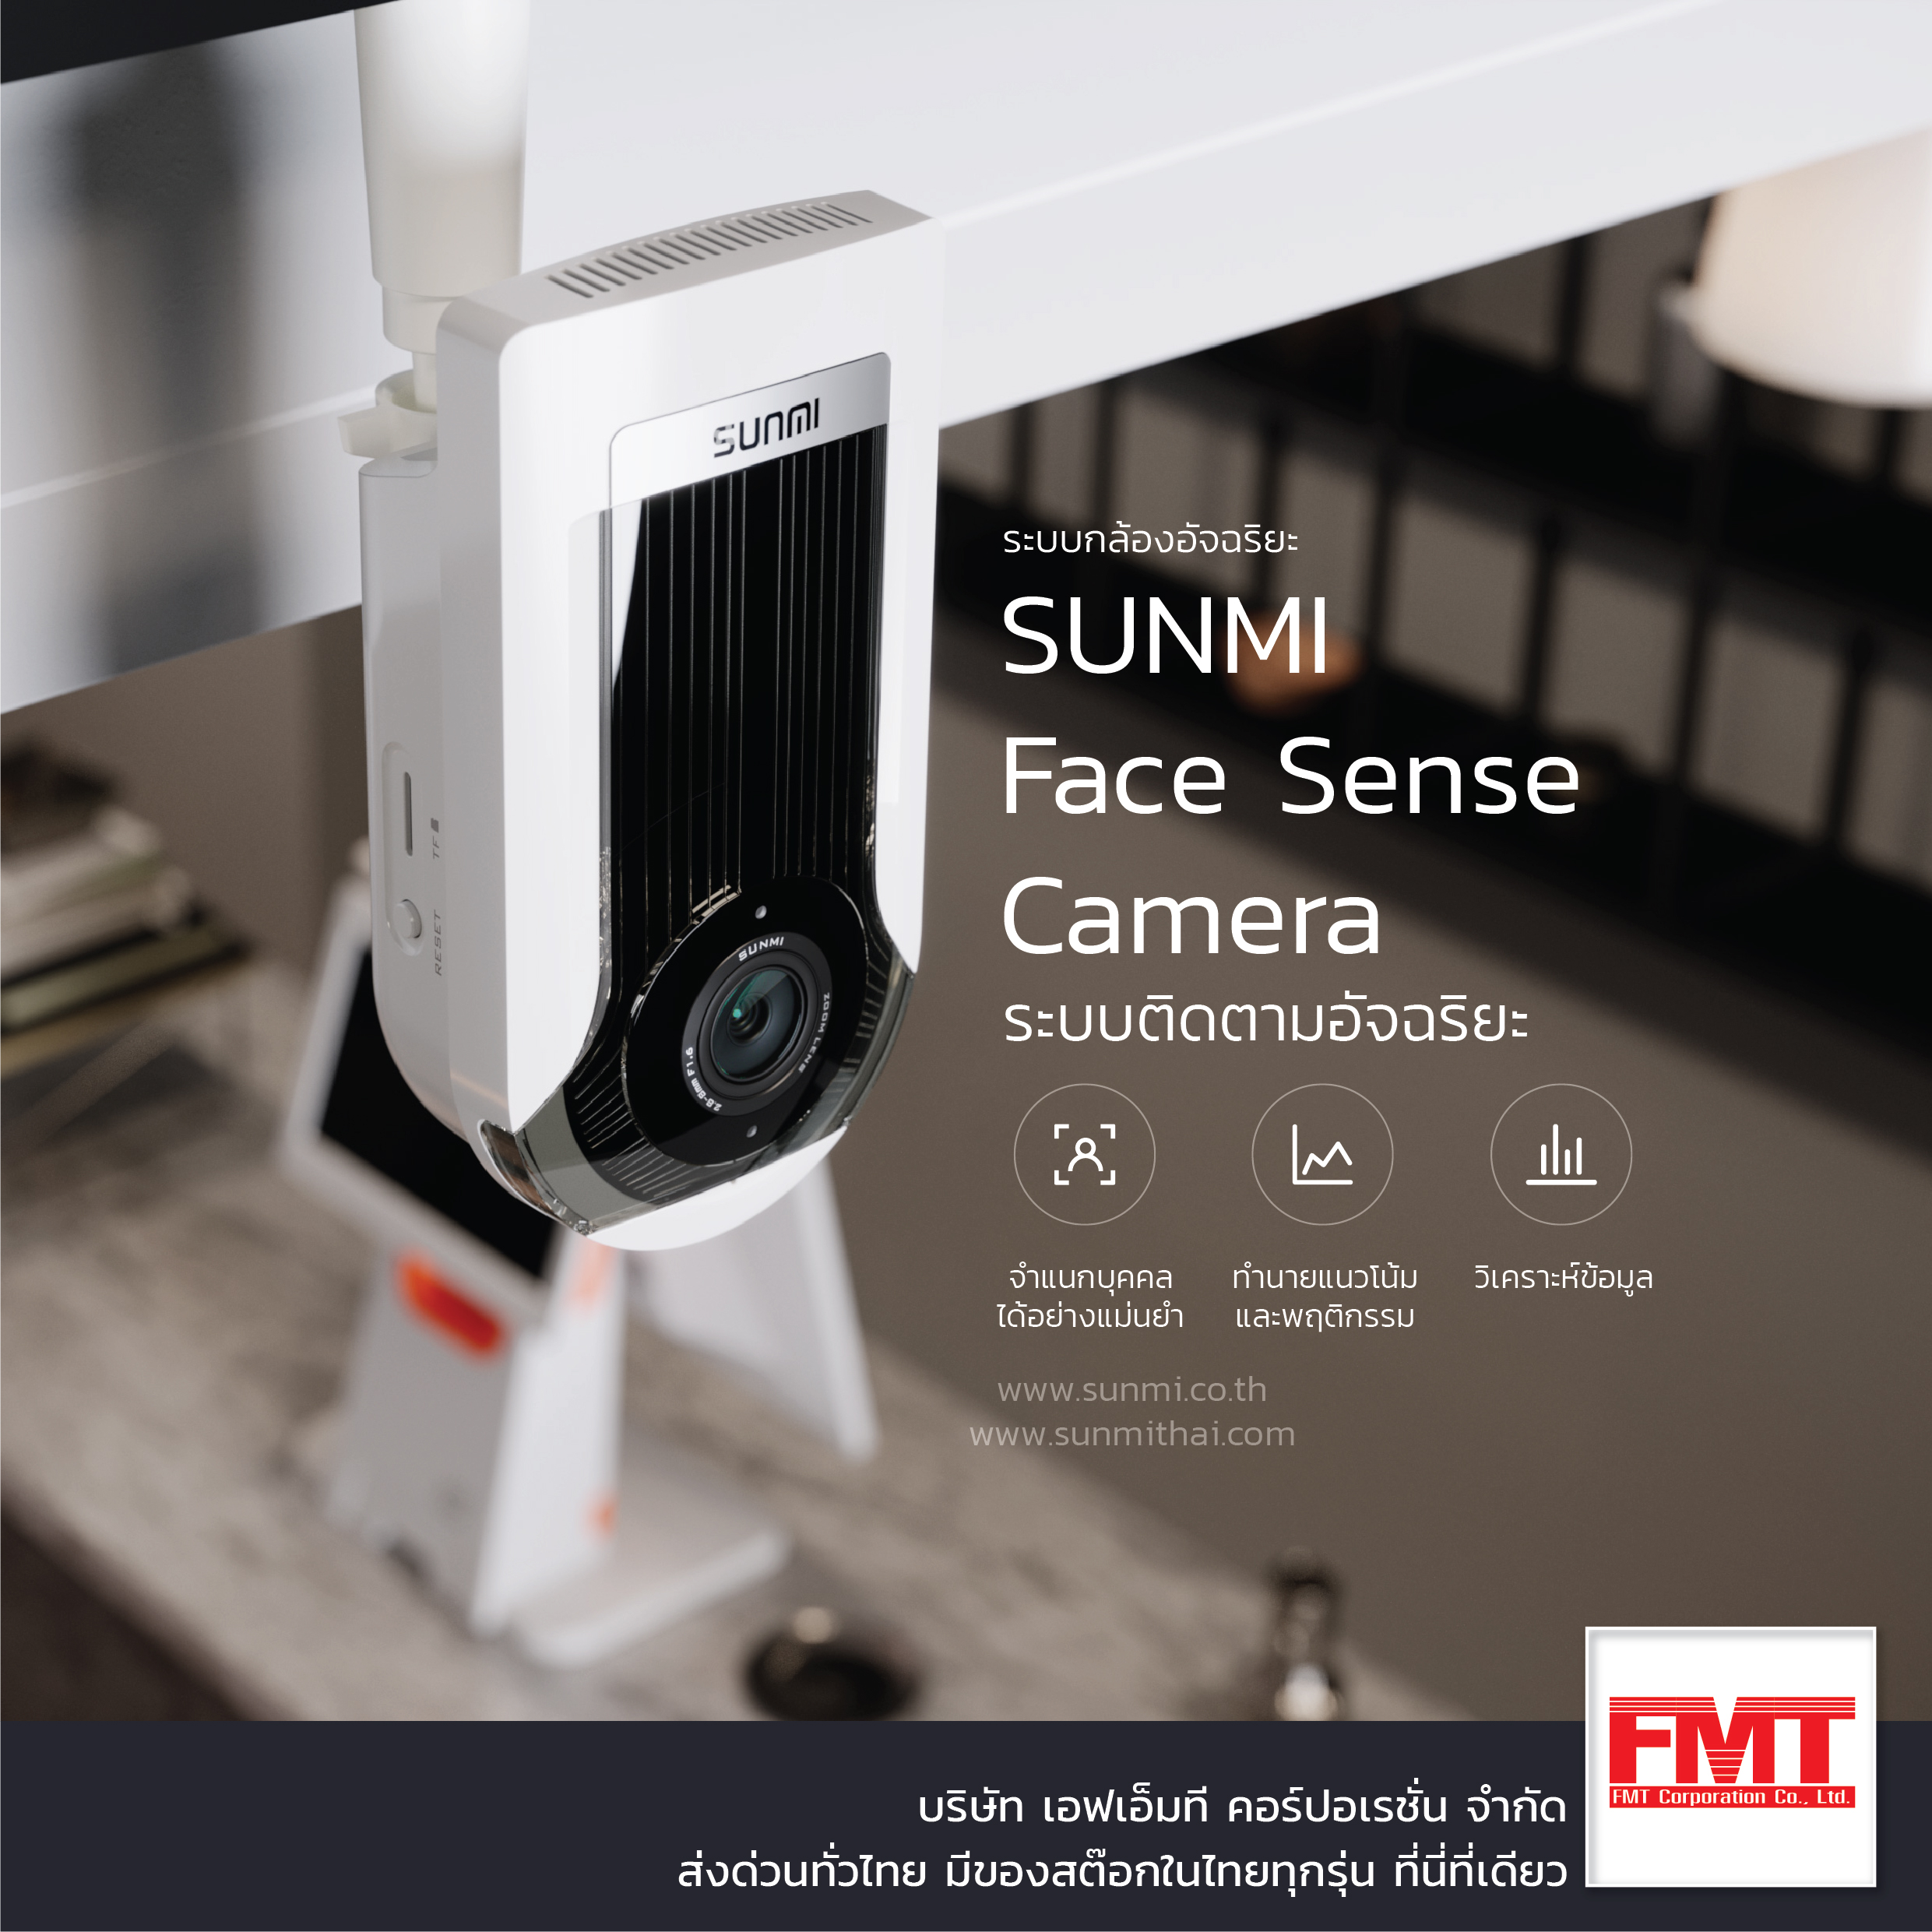 SUNMI Face Sense Camera